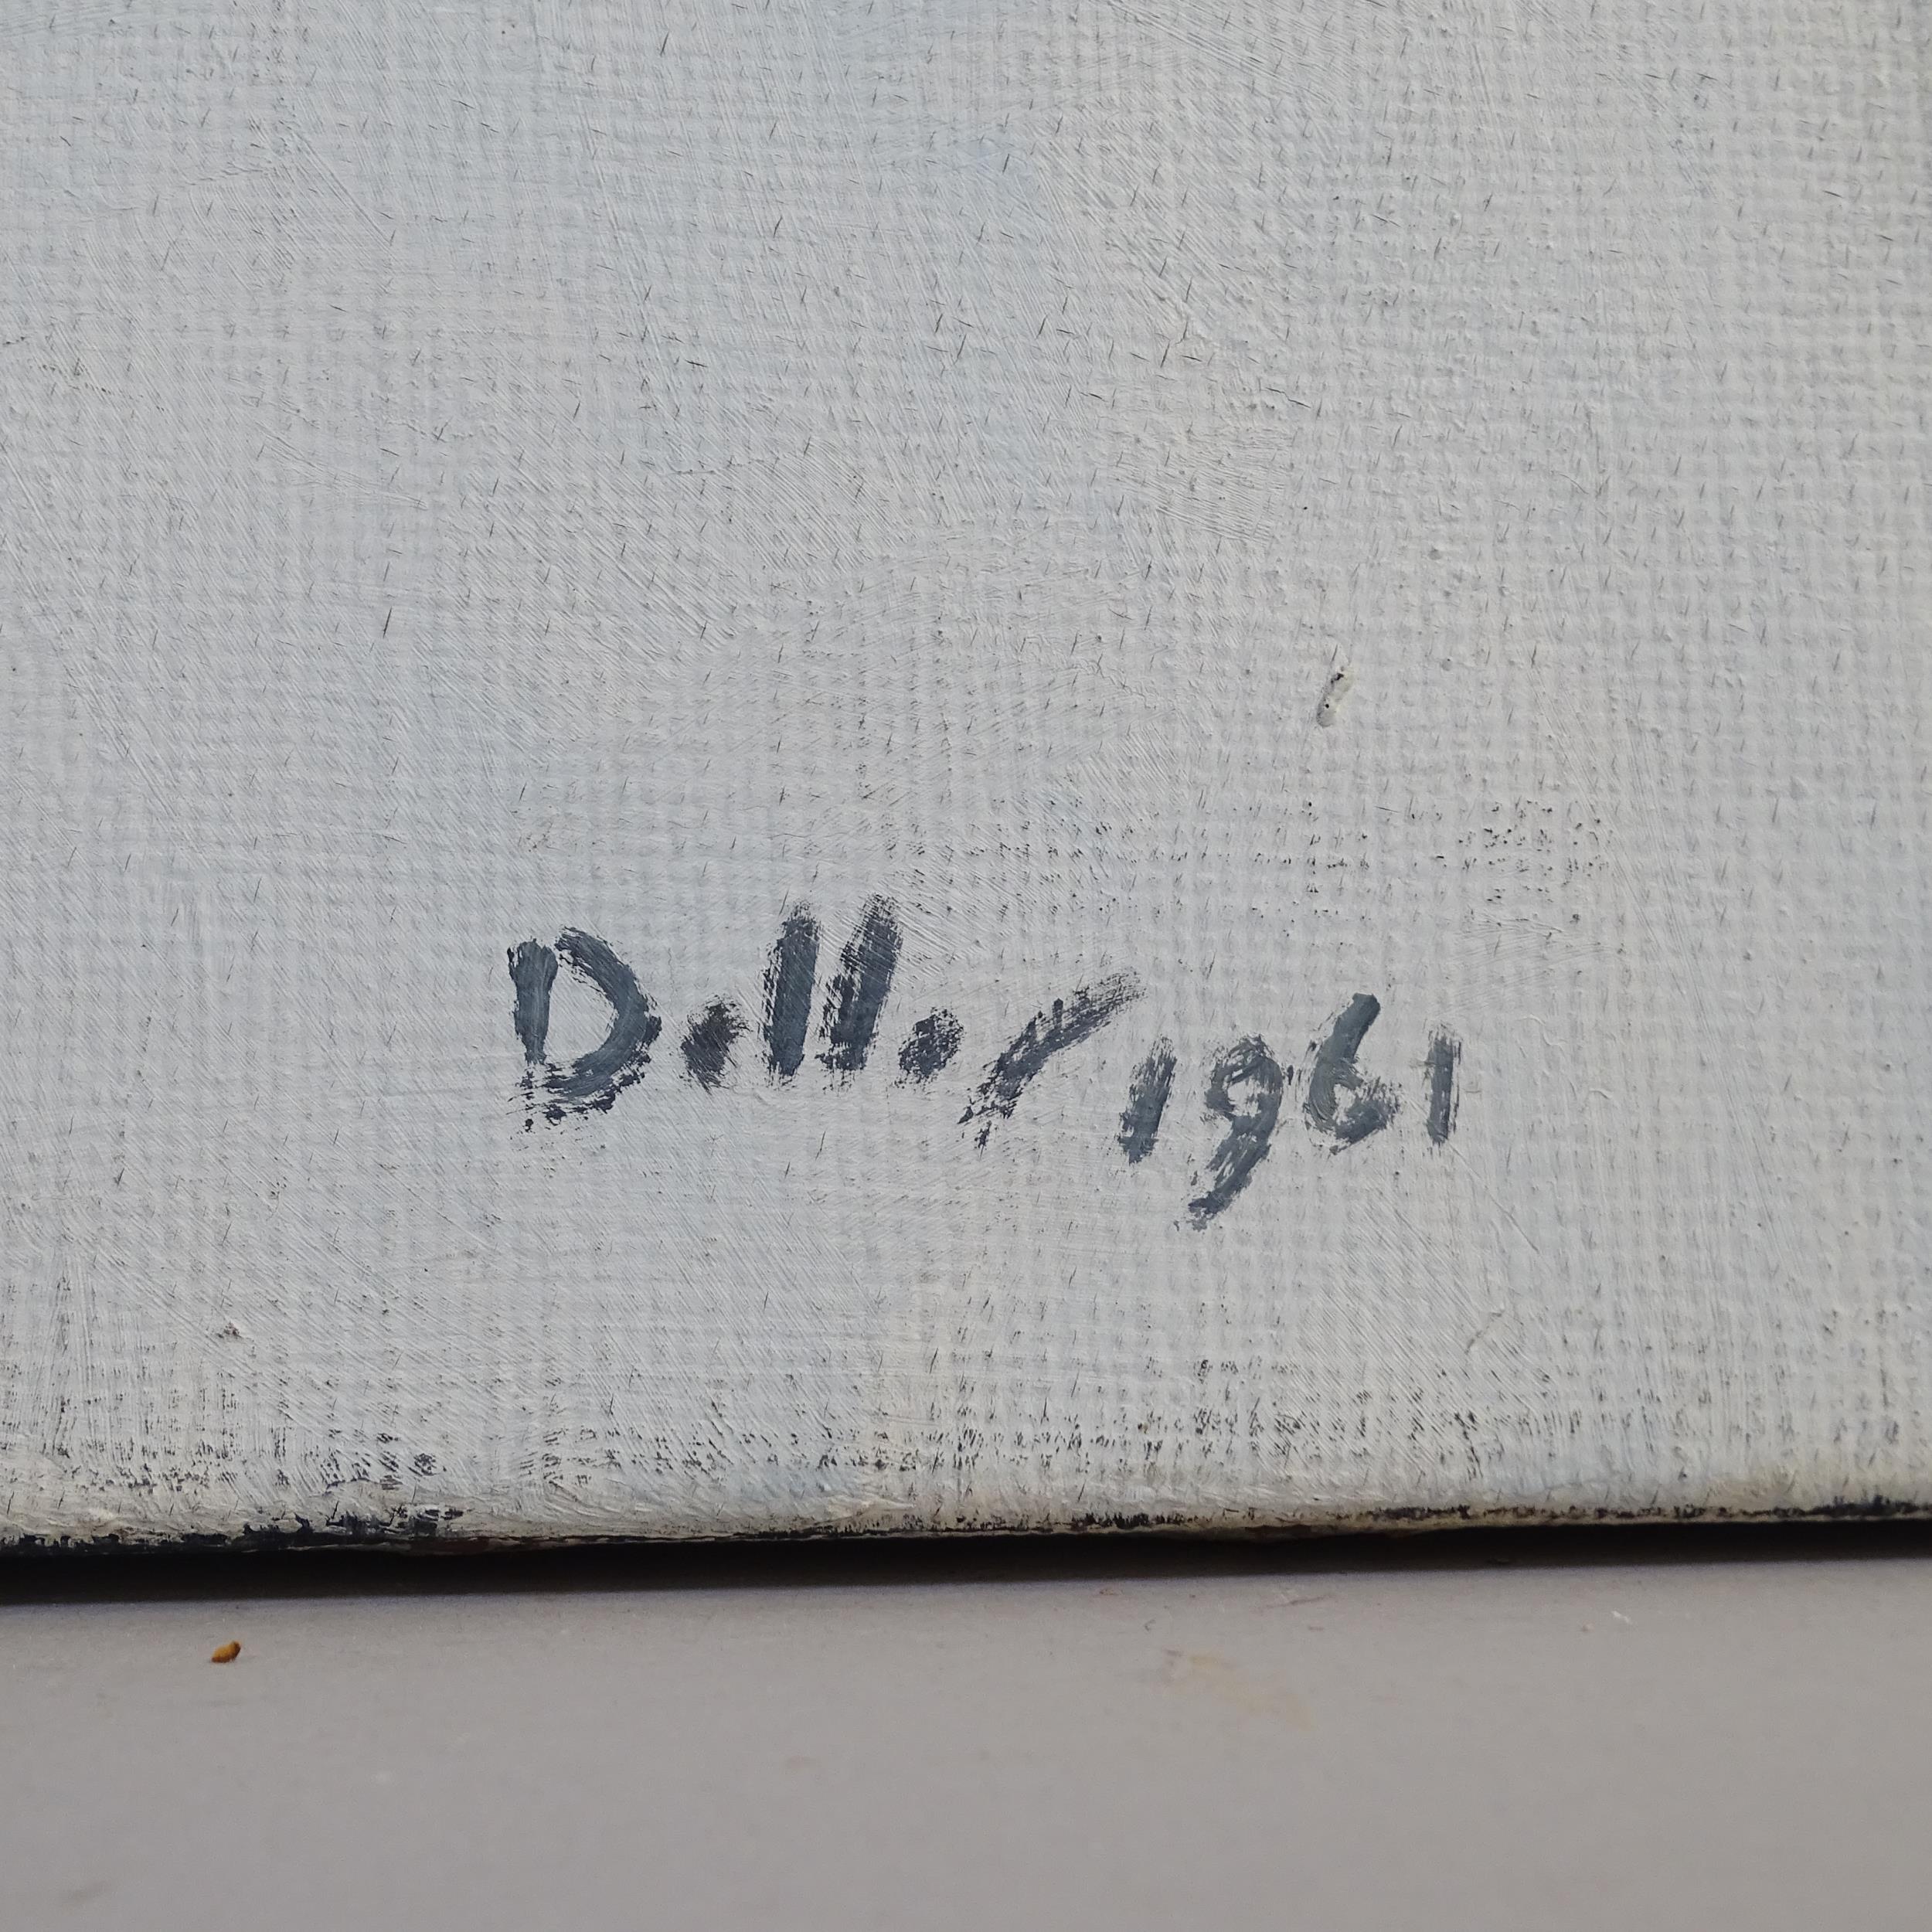 Ron Dellar, "180 white cogs", 77cm x 102cm, unframed - Image 2 of 2